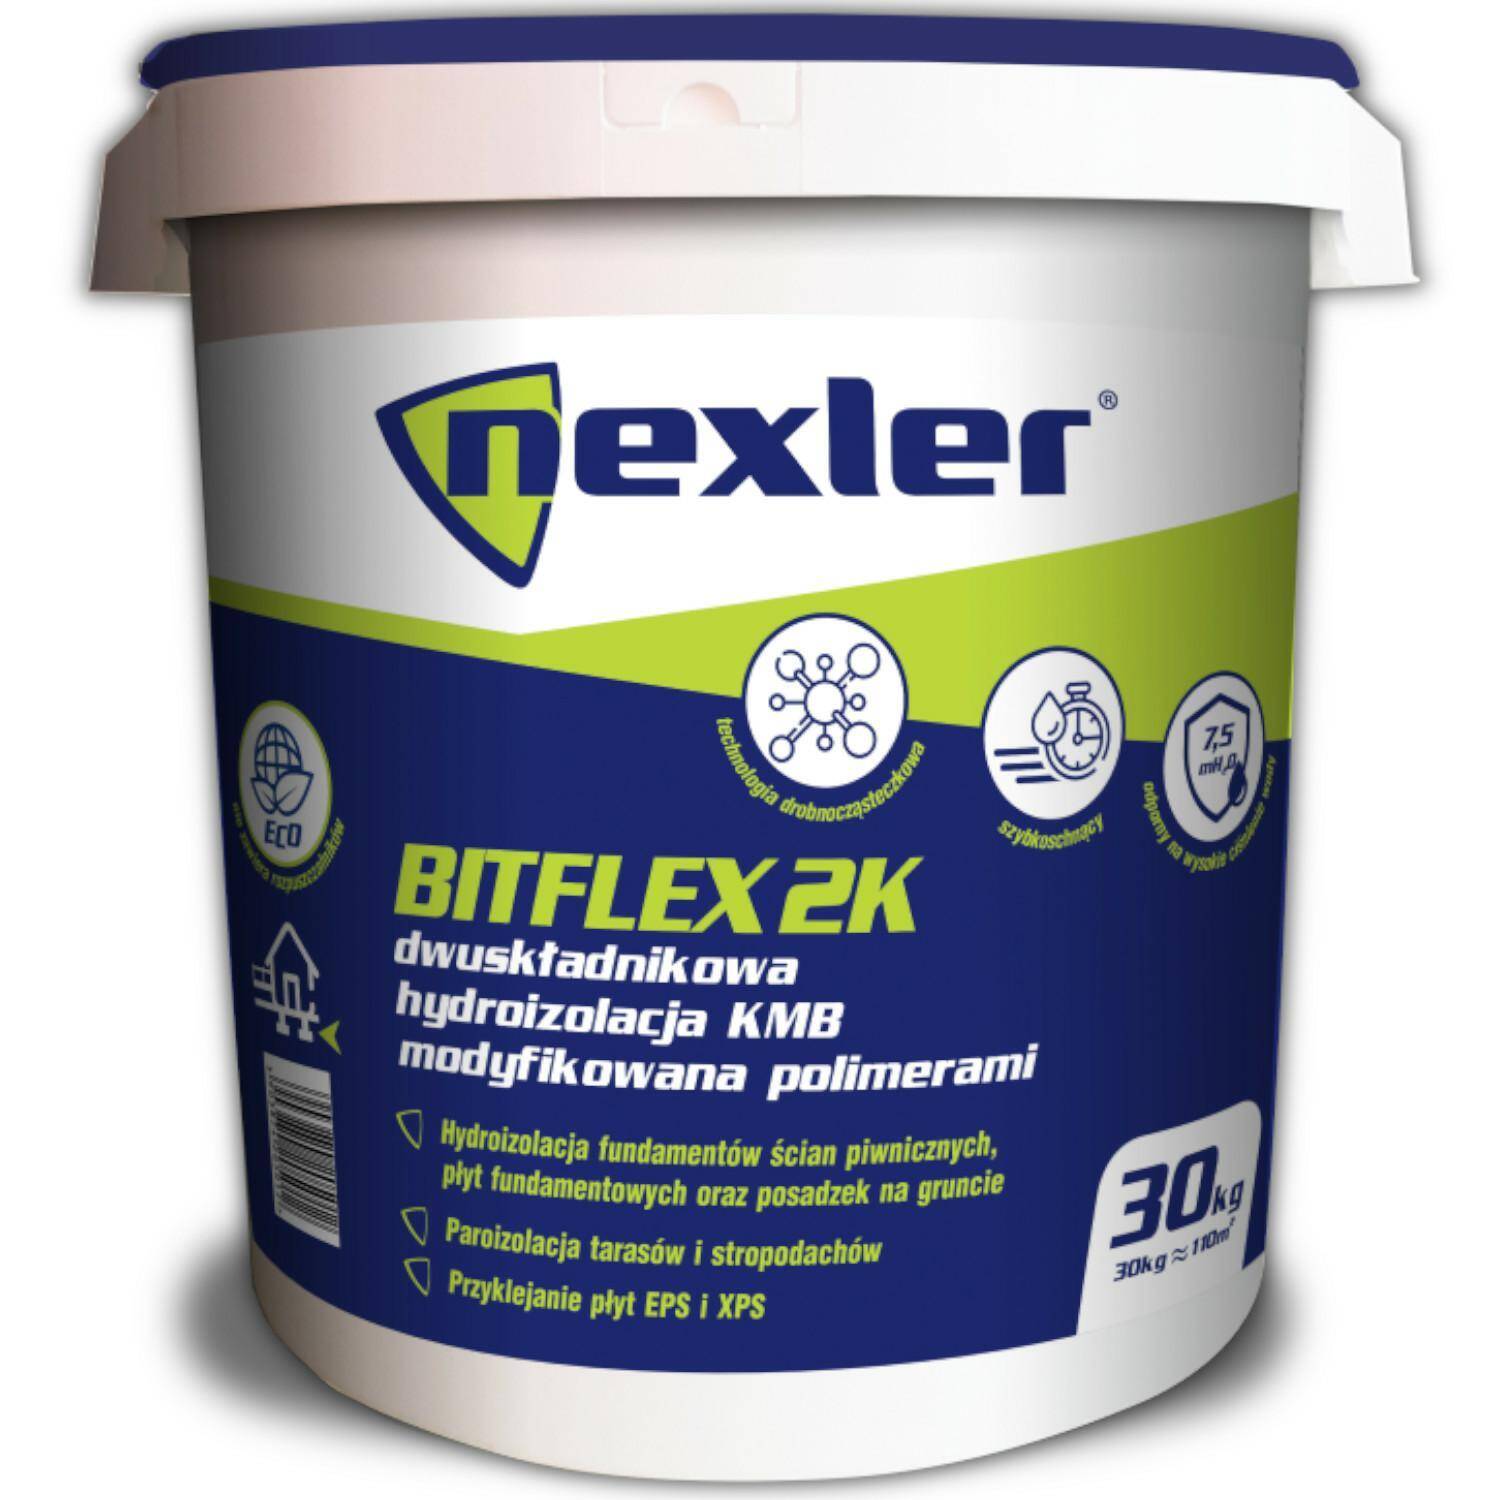 NEXLER Bitflex 2k dwuskładnikowa